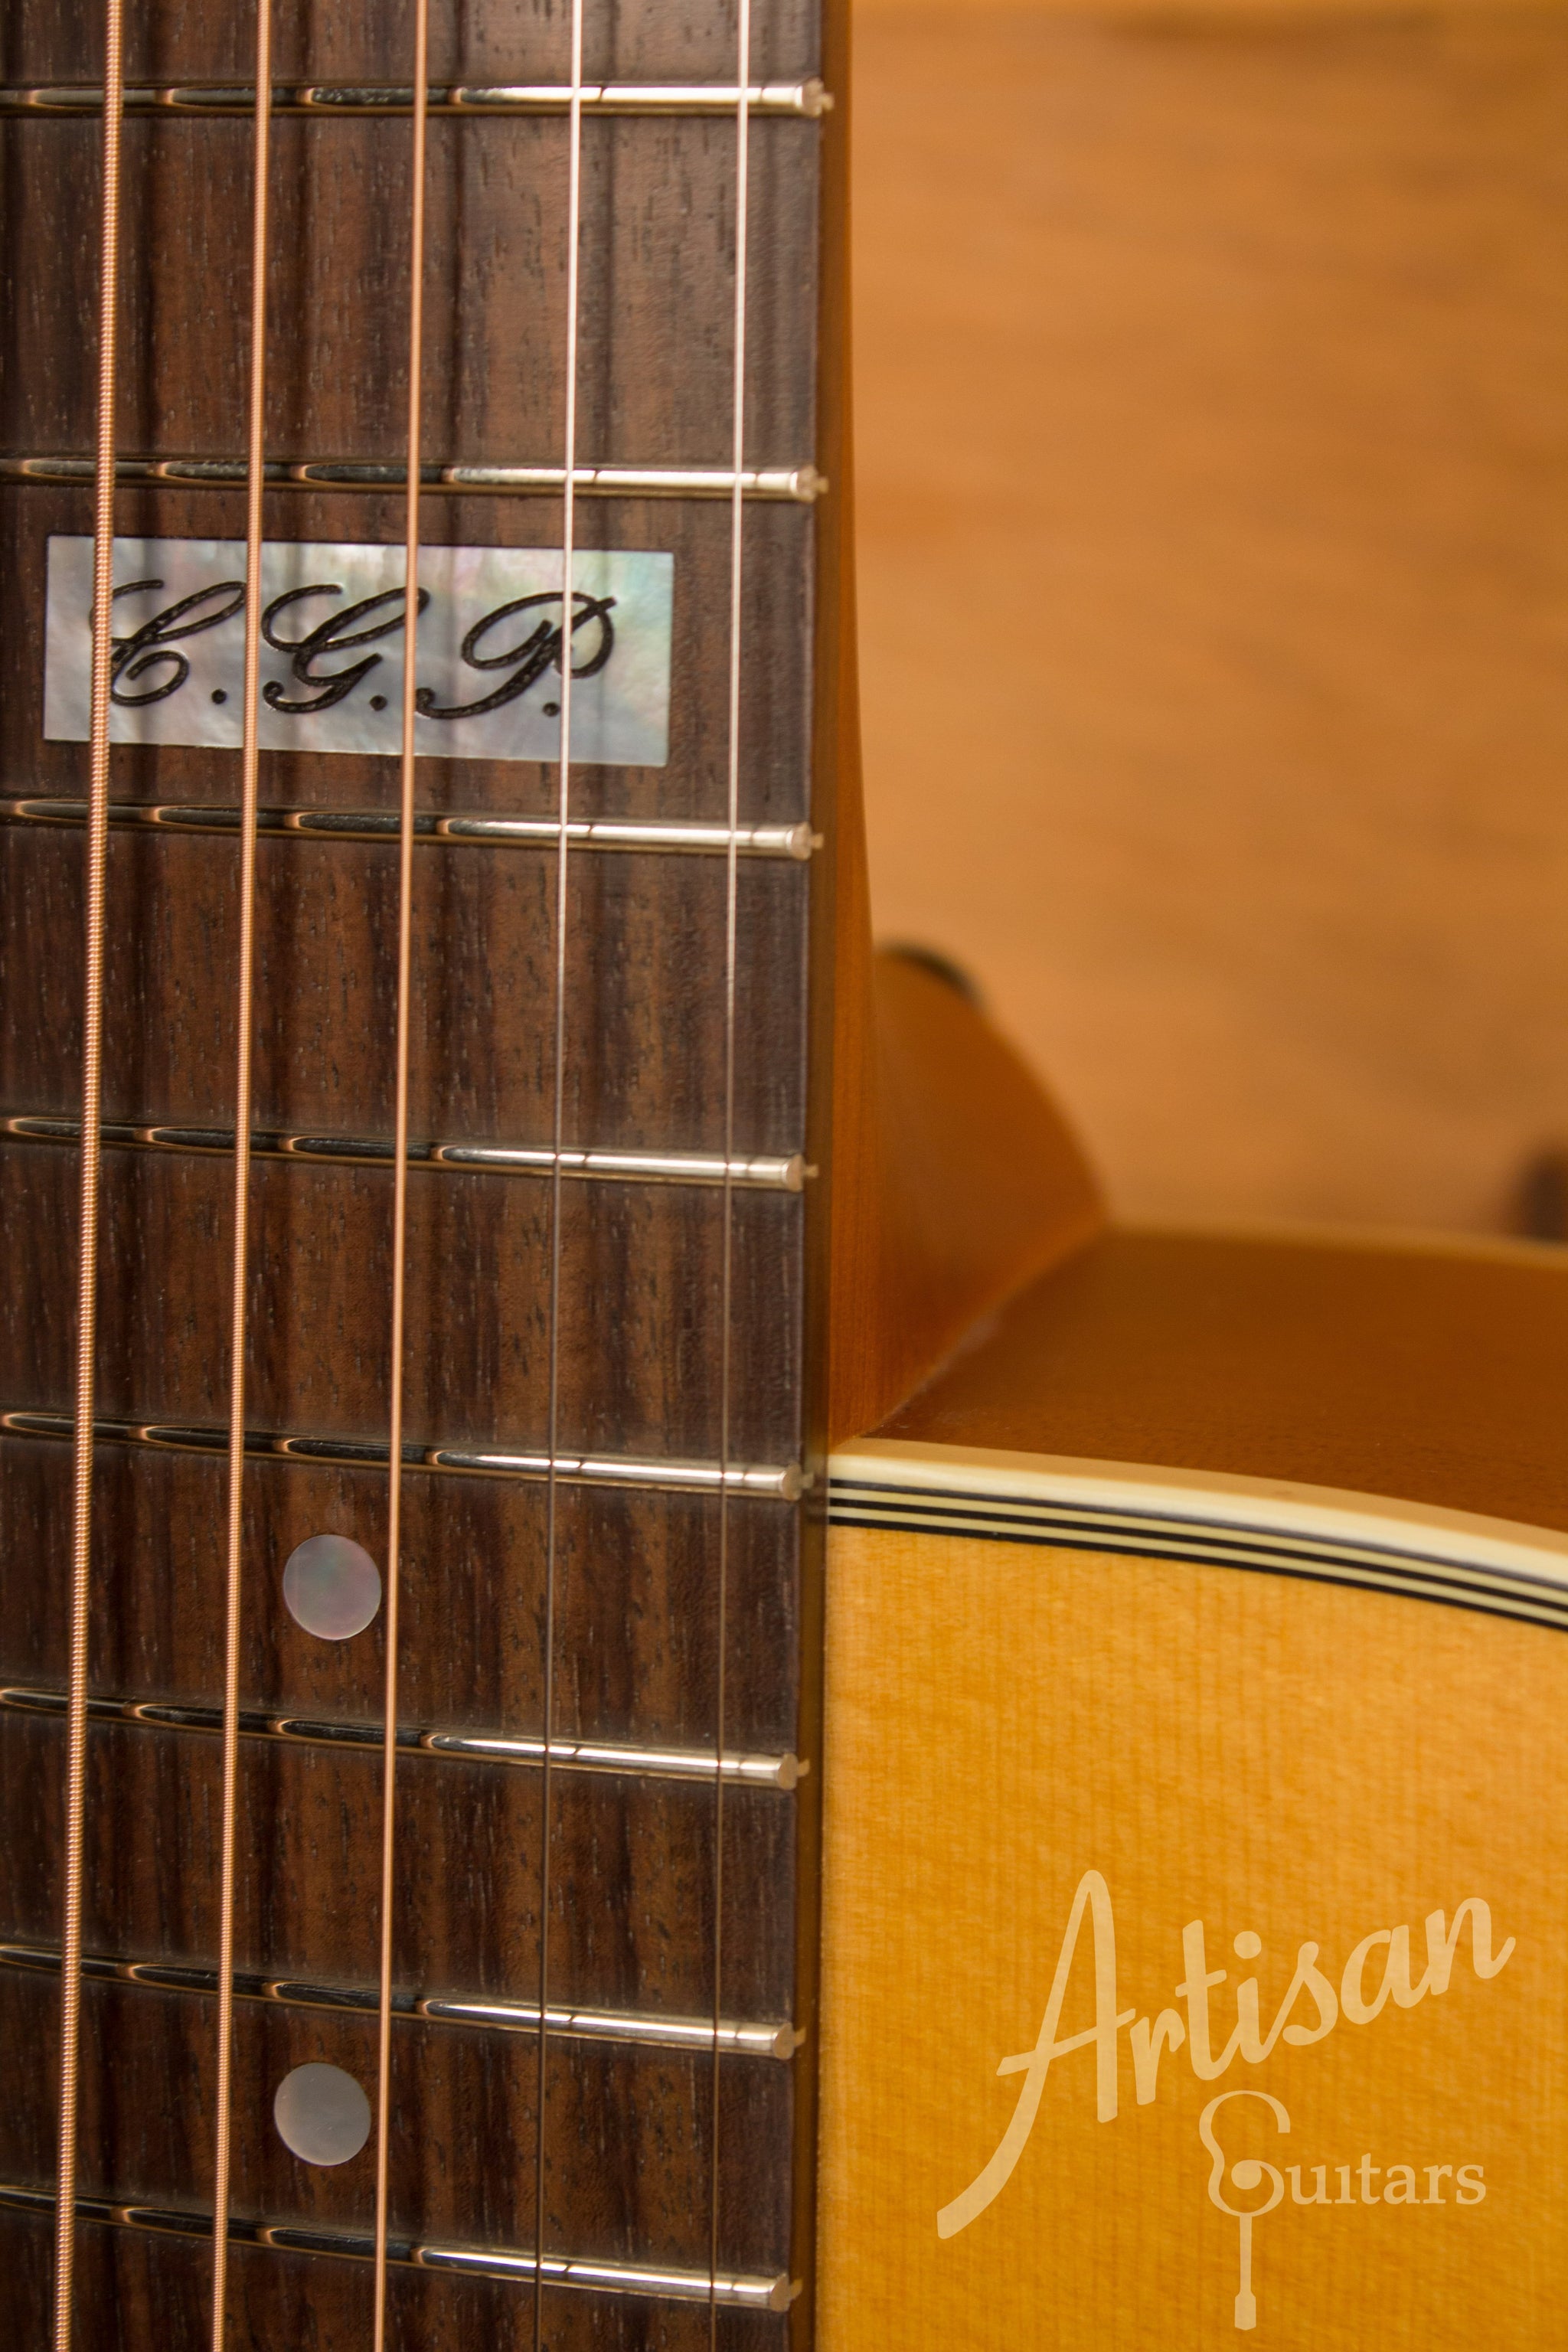 Maton EBG 808 TE Tommy Emmanuel Signature Guitar ID-11317 - Artisan Guitars